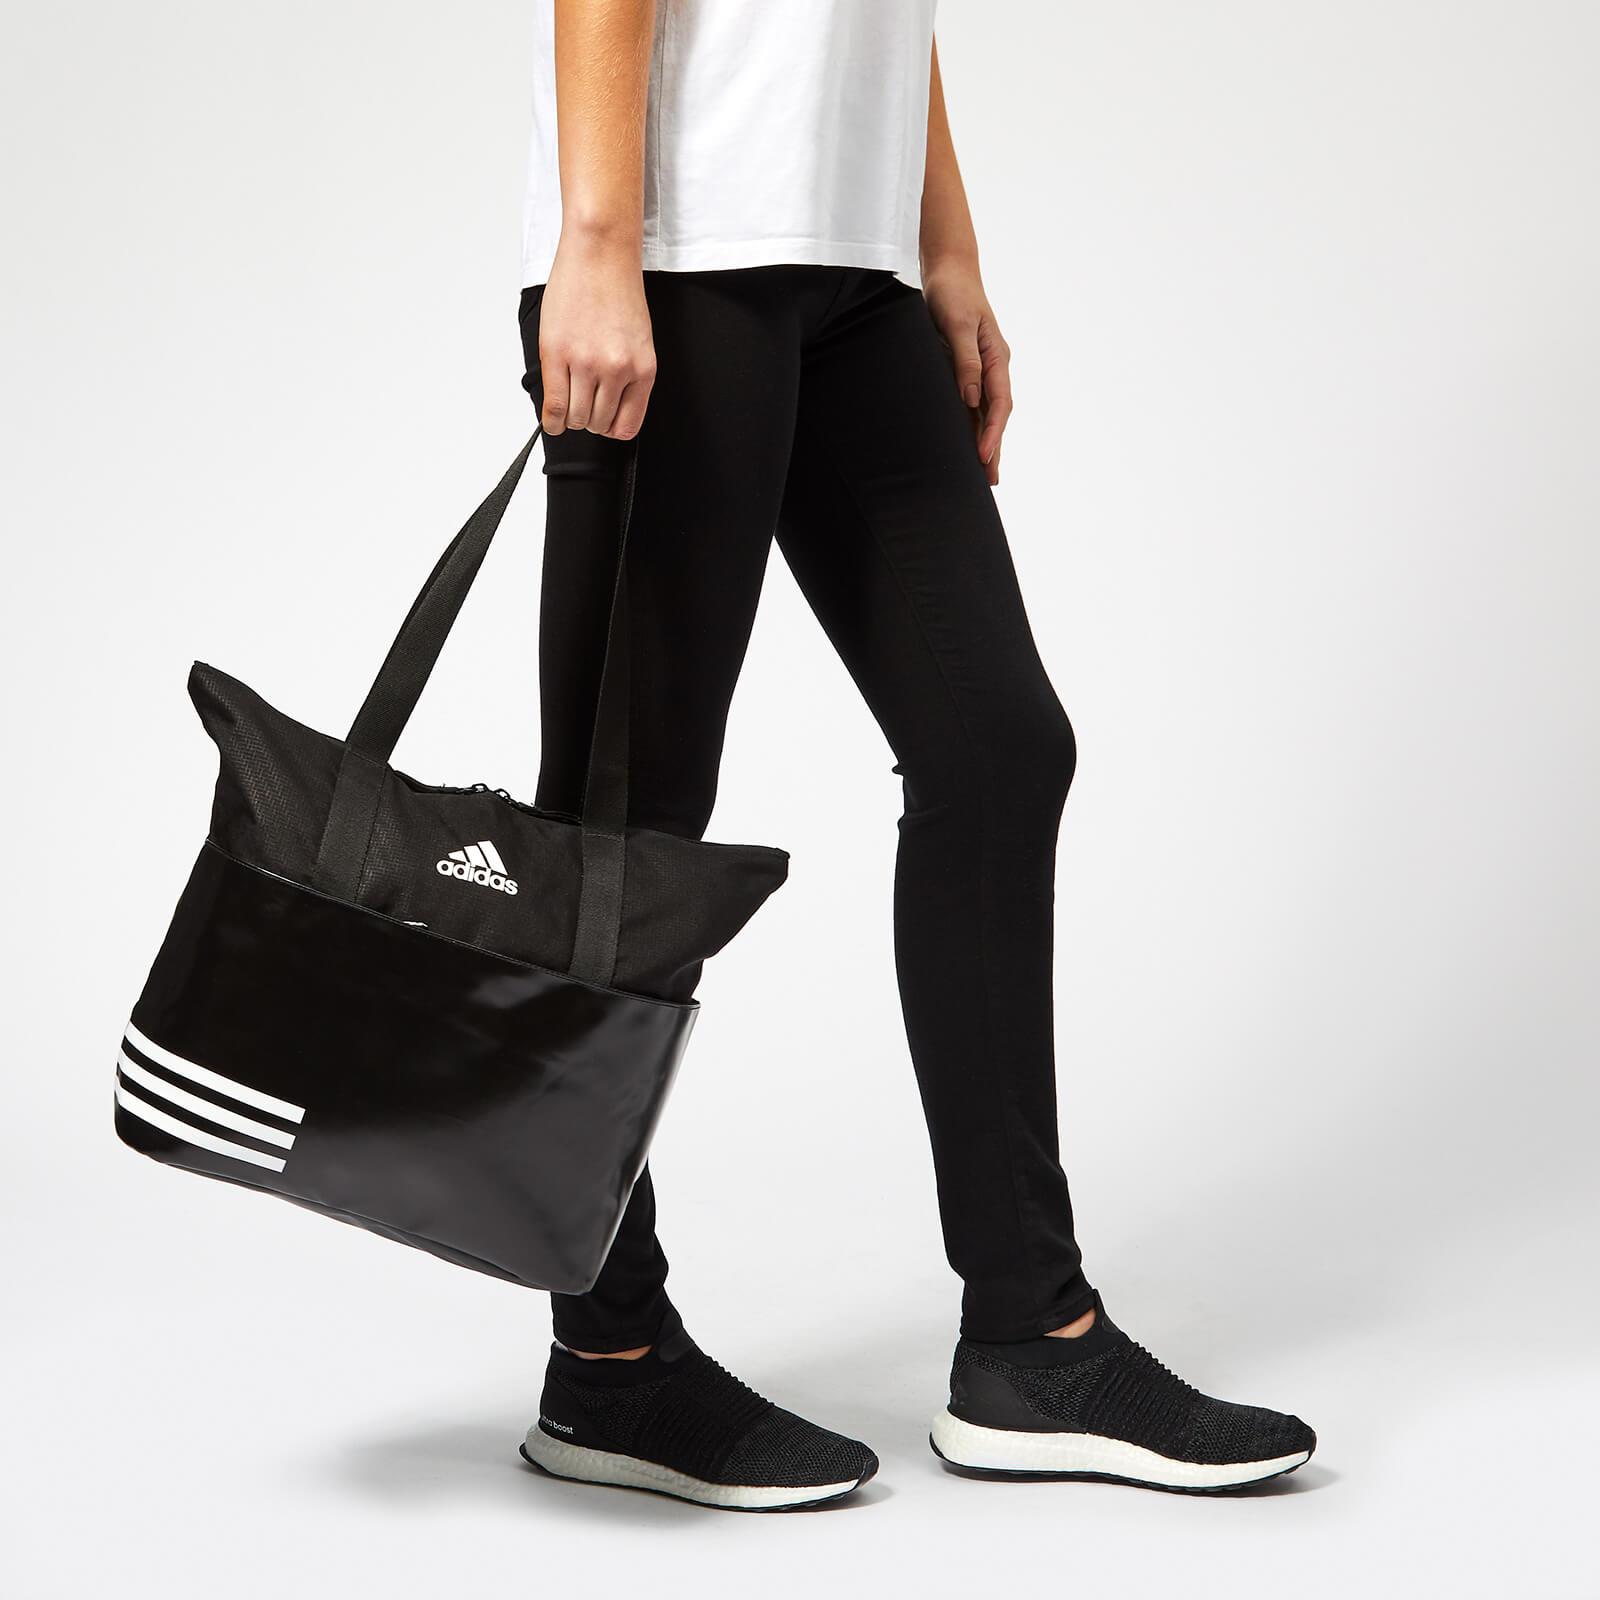 adidas women's tote bag